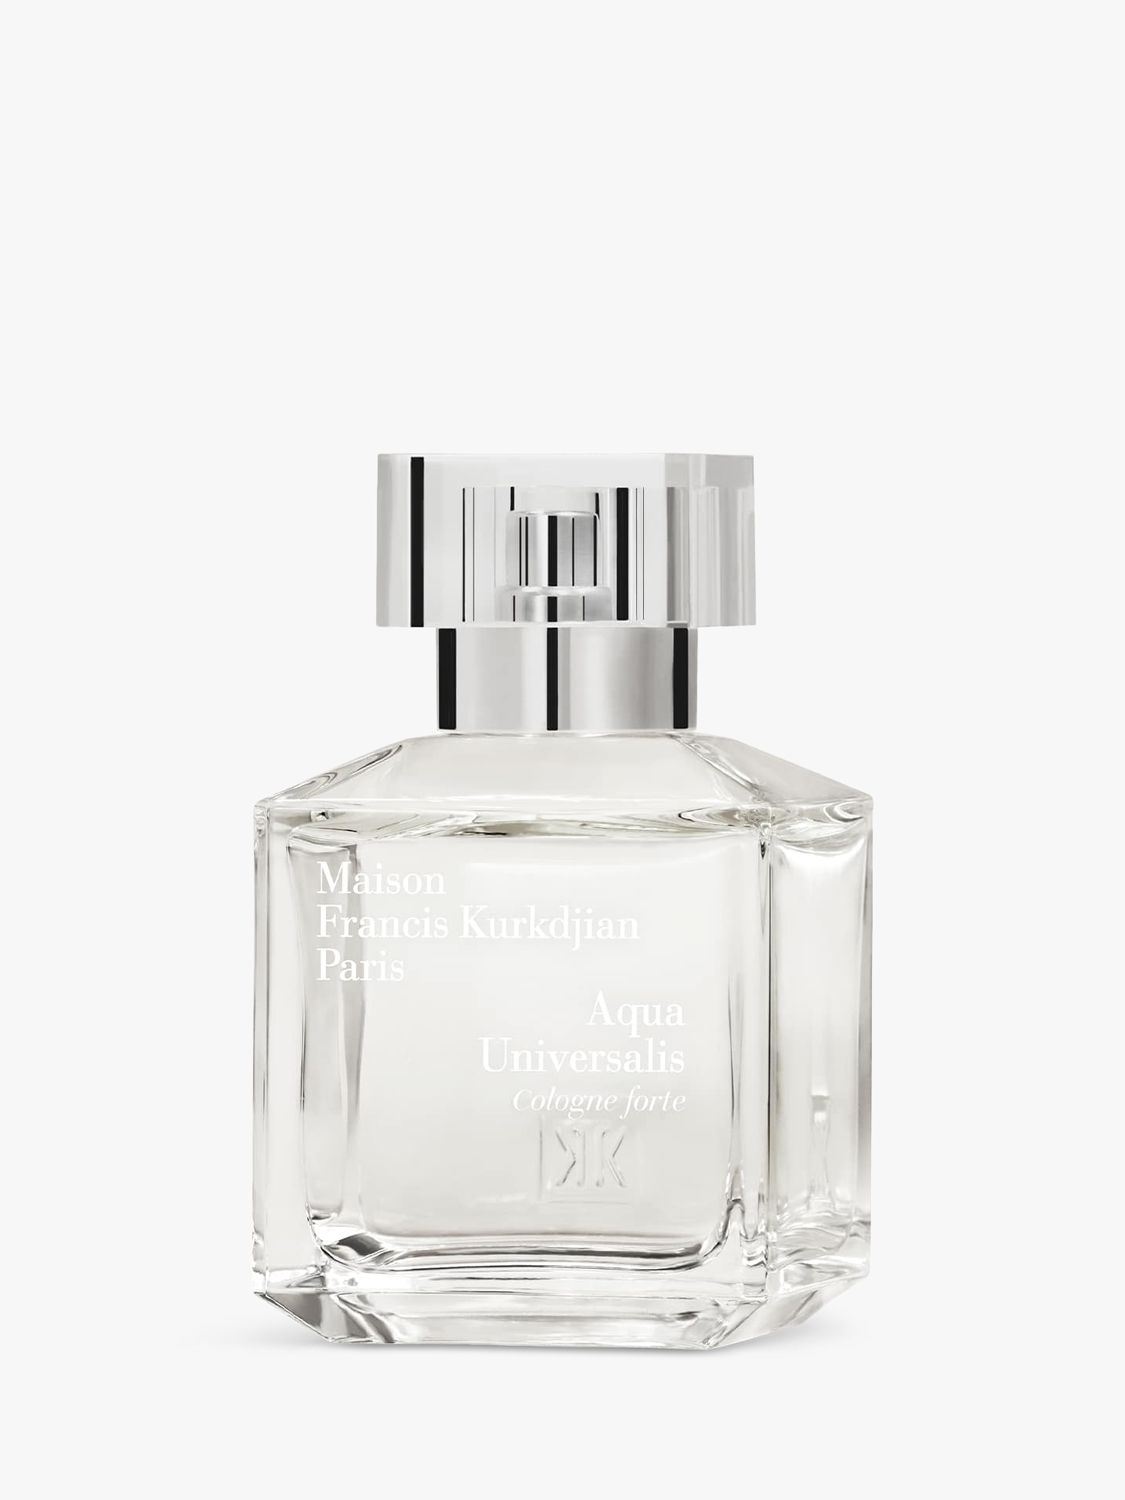 Maison Francis Kurkdjian Aqua Universalis Cologne Forte Eau de Parfum, 70ml 1